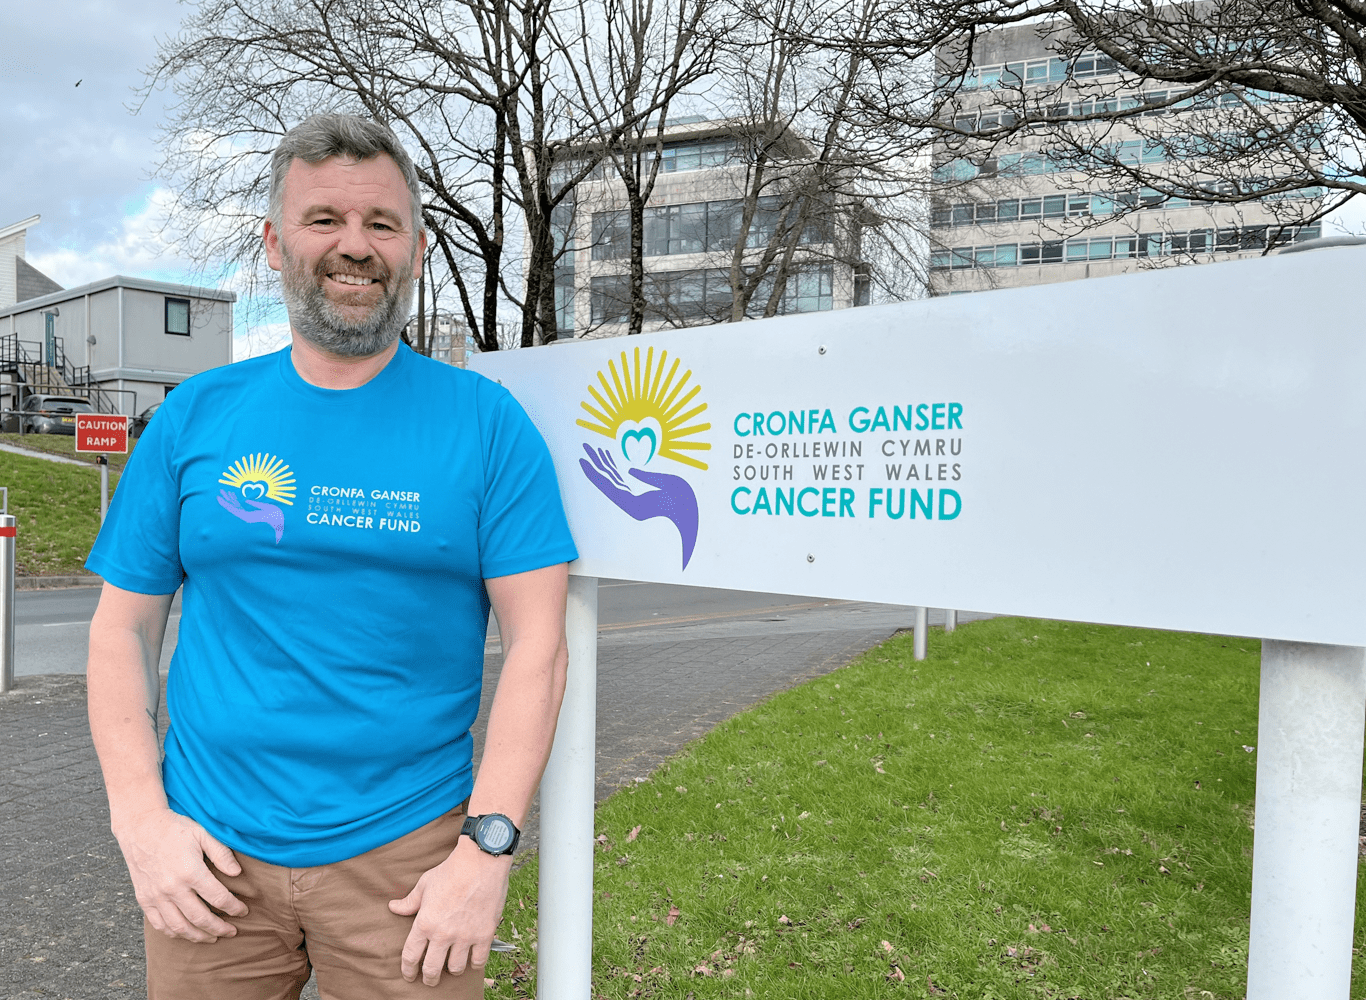 Daring fundraiser packs his trunks to help raise money for cancer centre